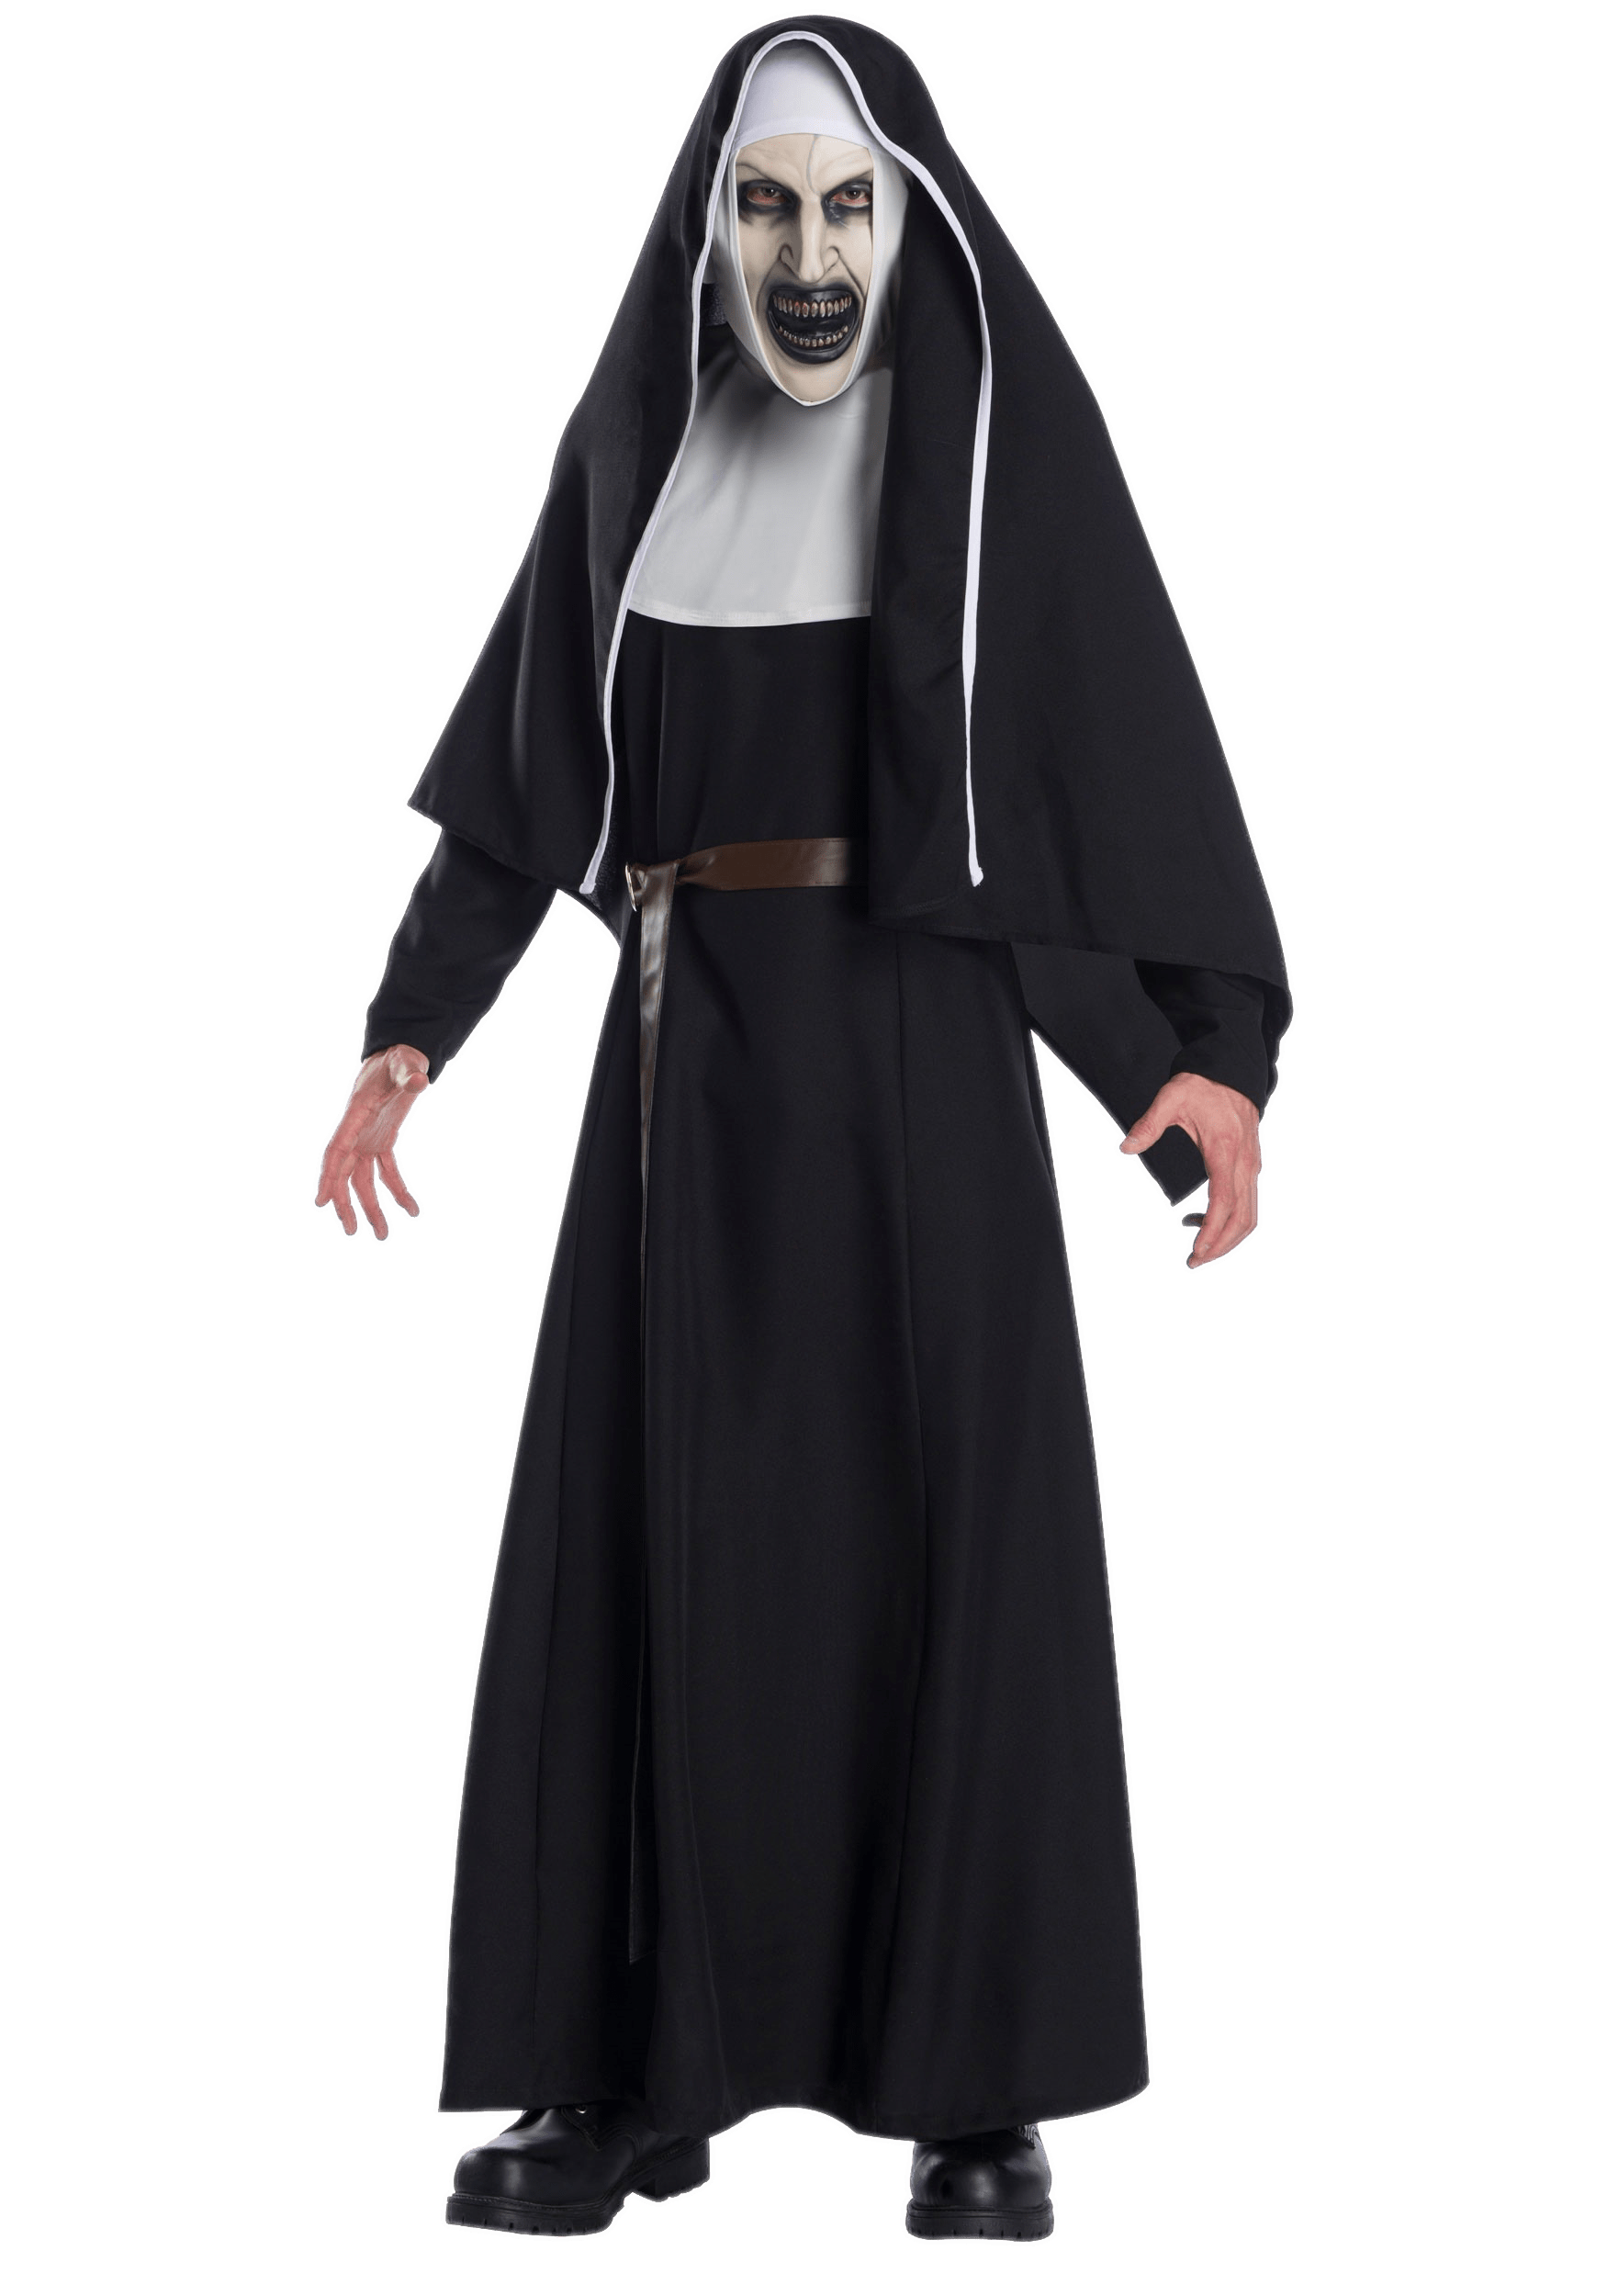 The Nun Costume SVG Clip arts